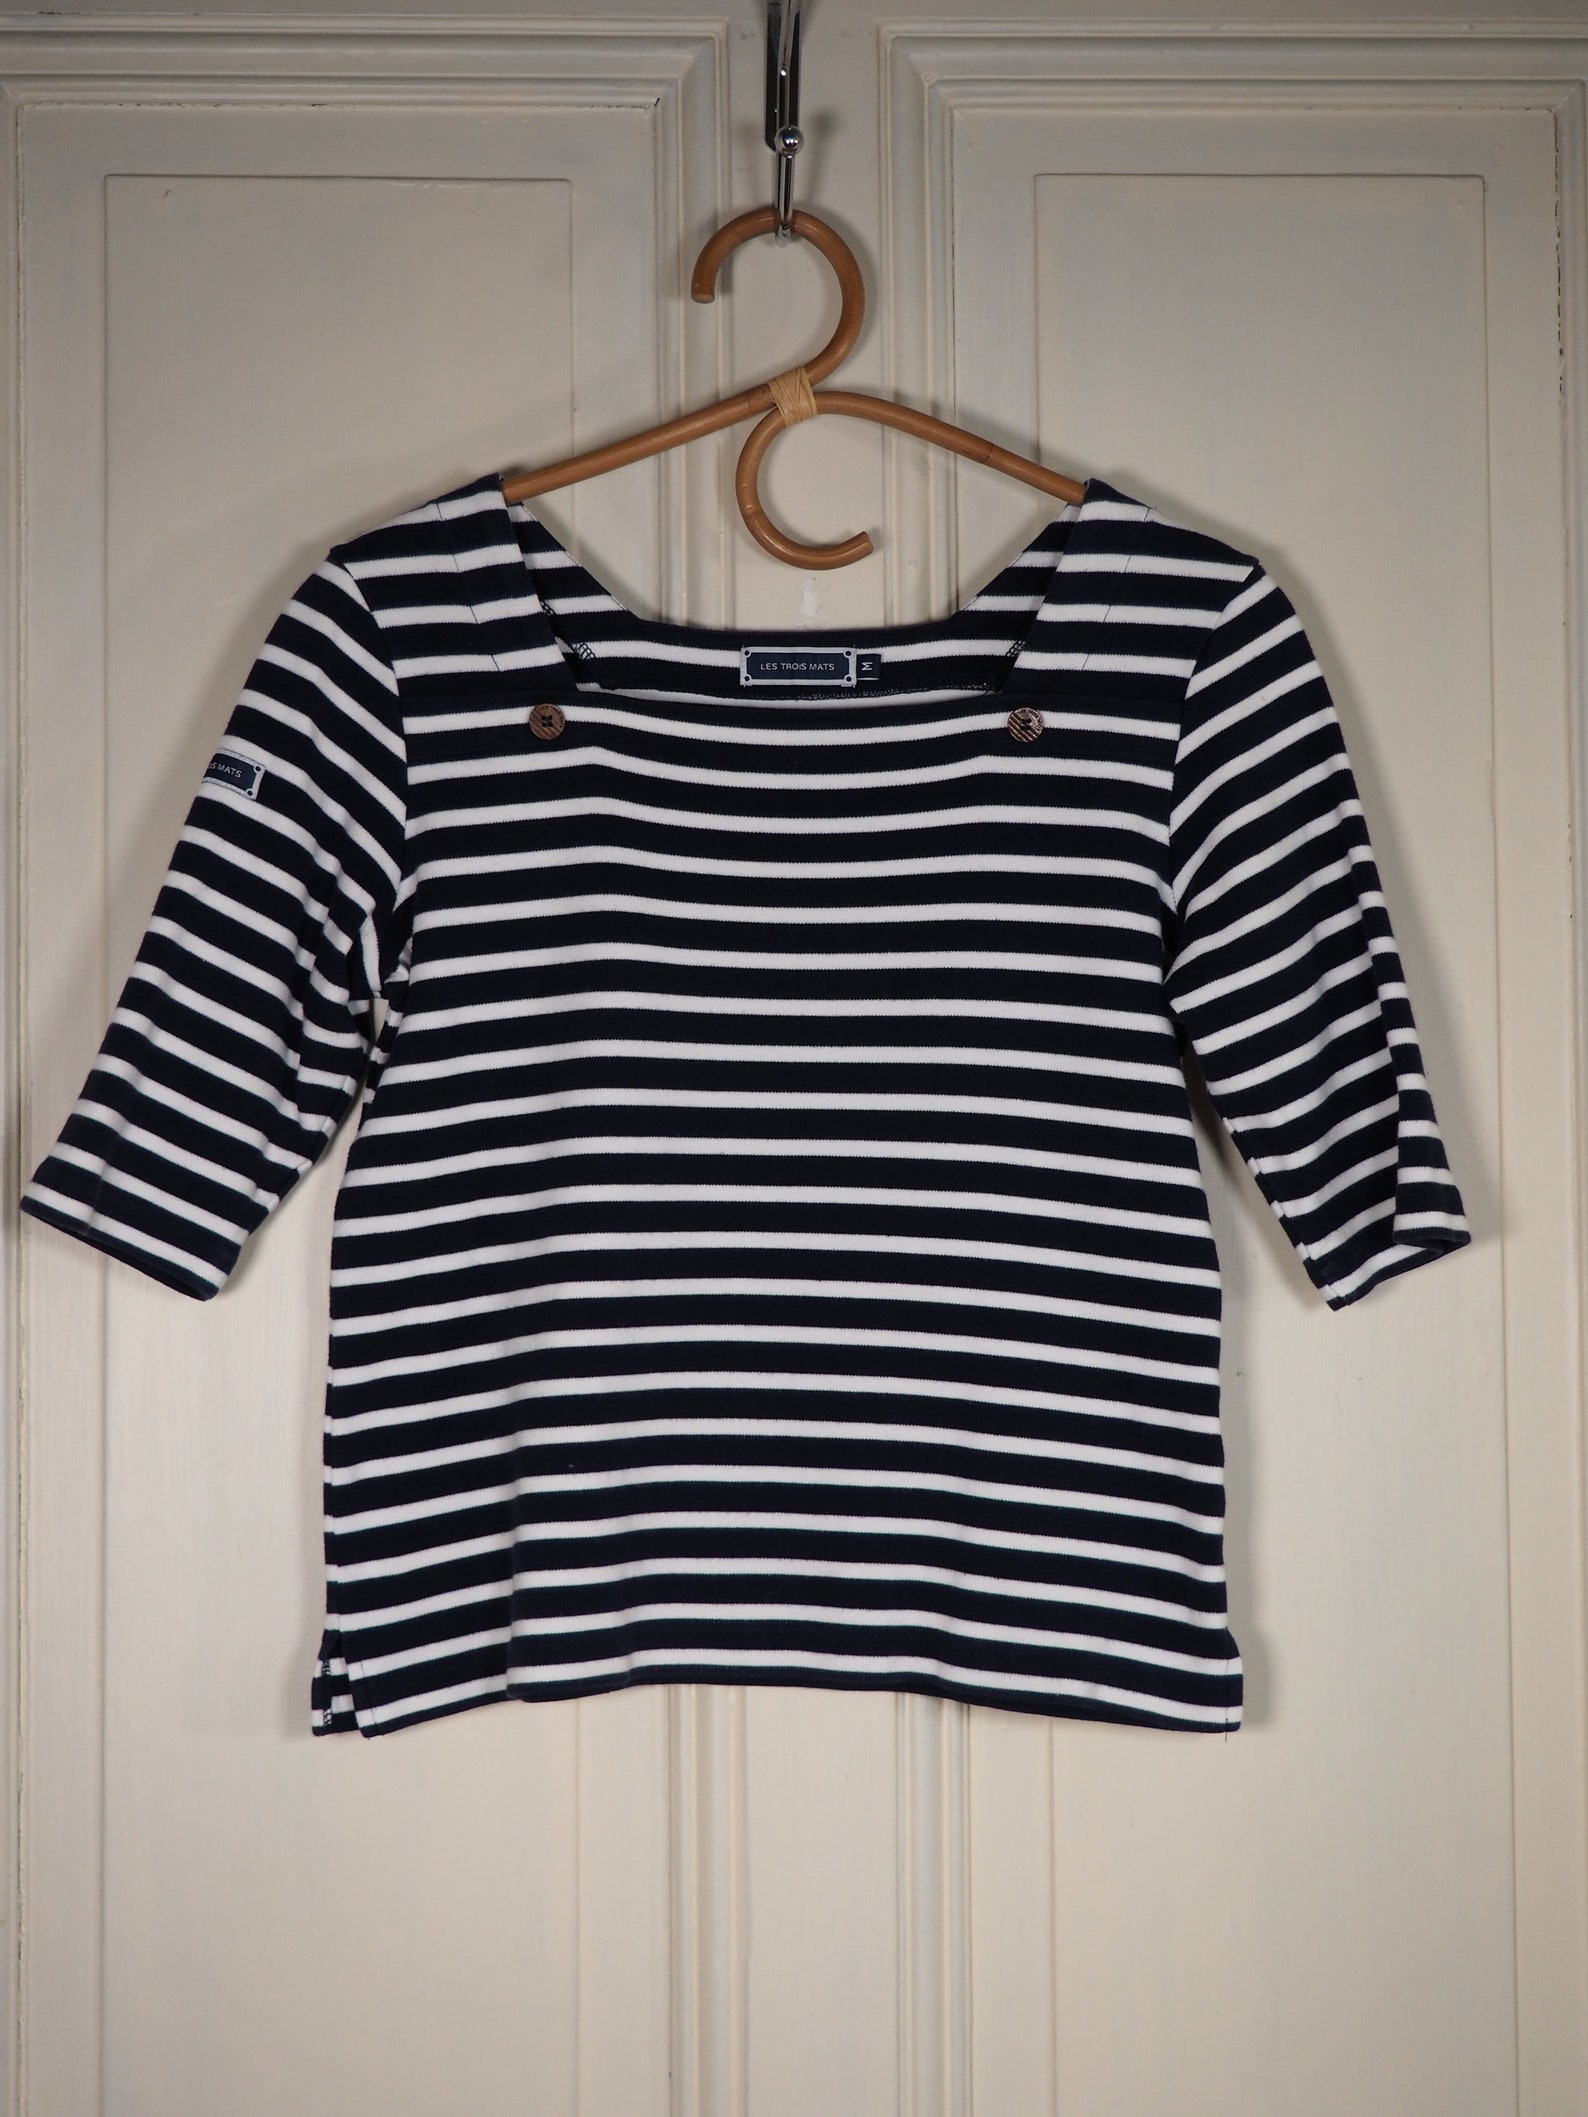 Vintage striped shirt sailors t-shirt sailor shirt Breton | Etsy